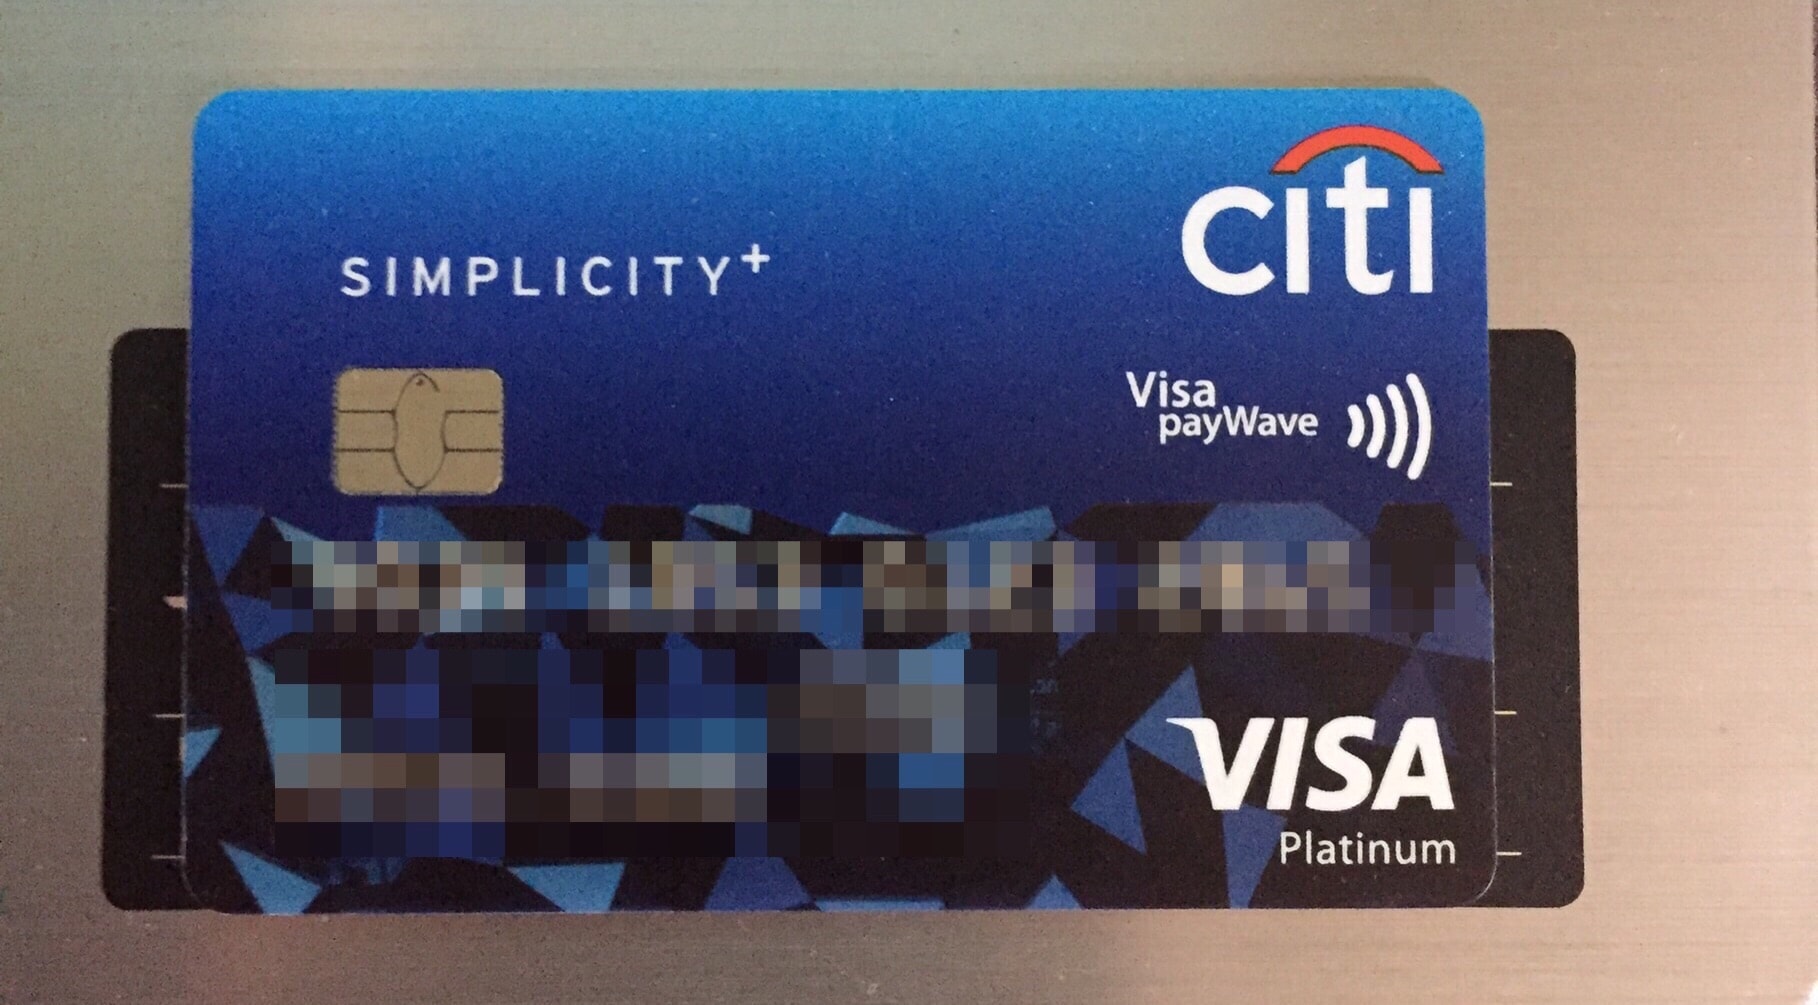 Citibank Simplicity+ Visa Credit Card Application Review